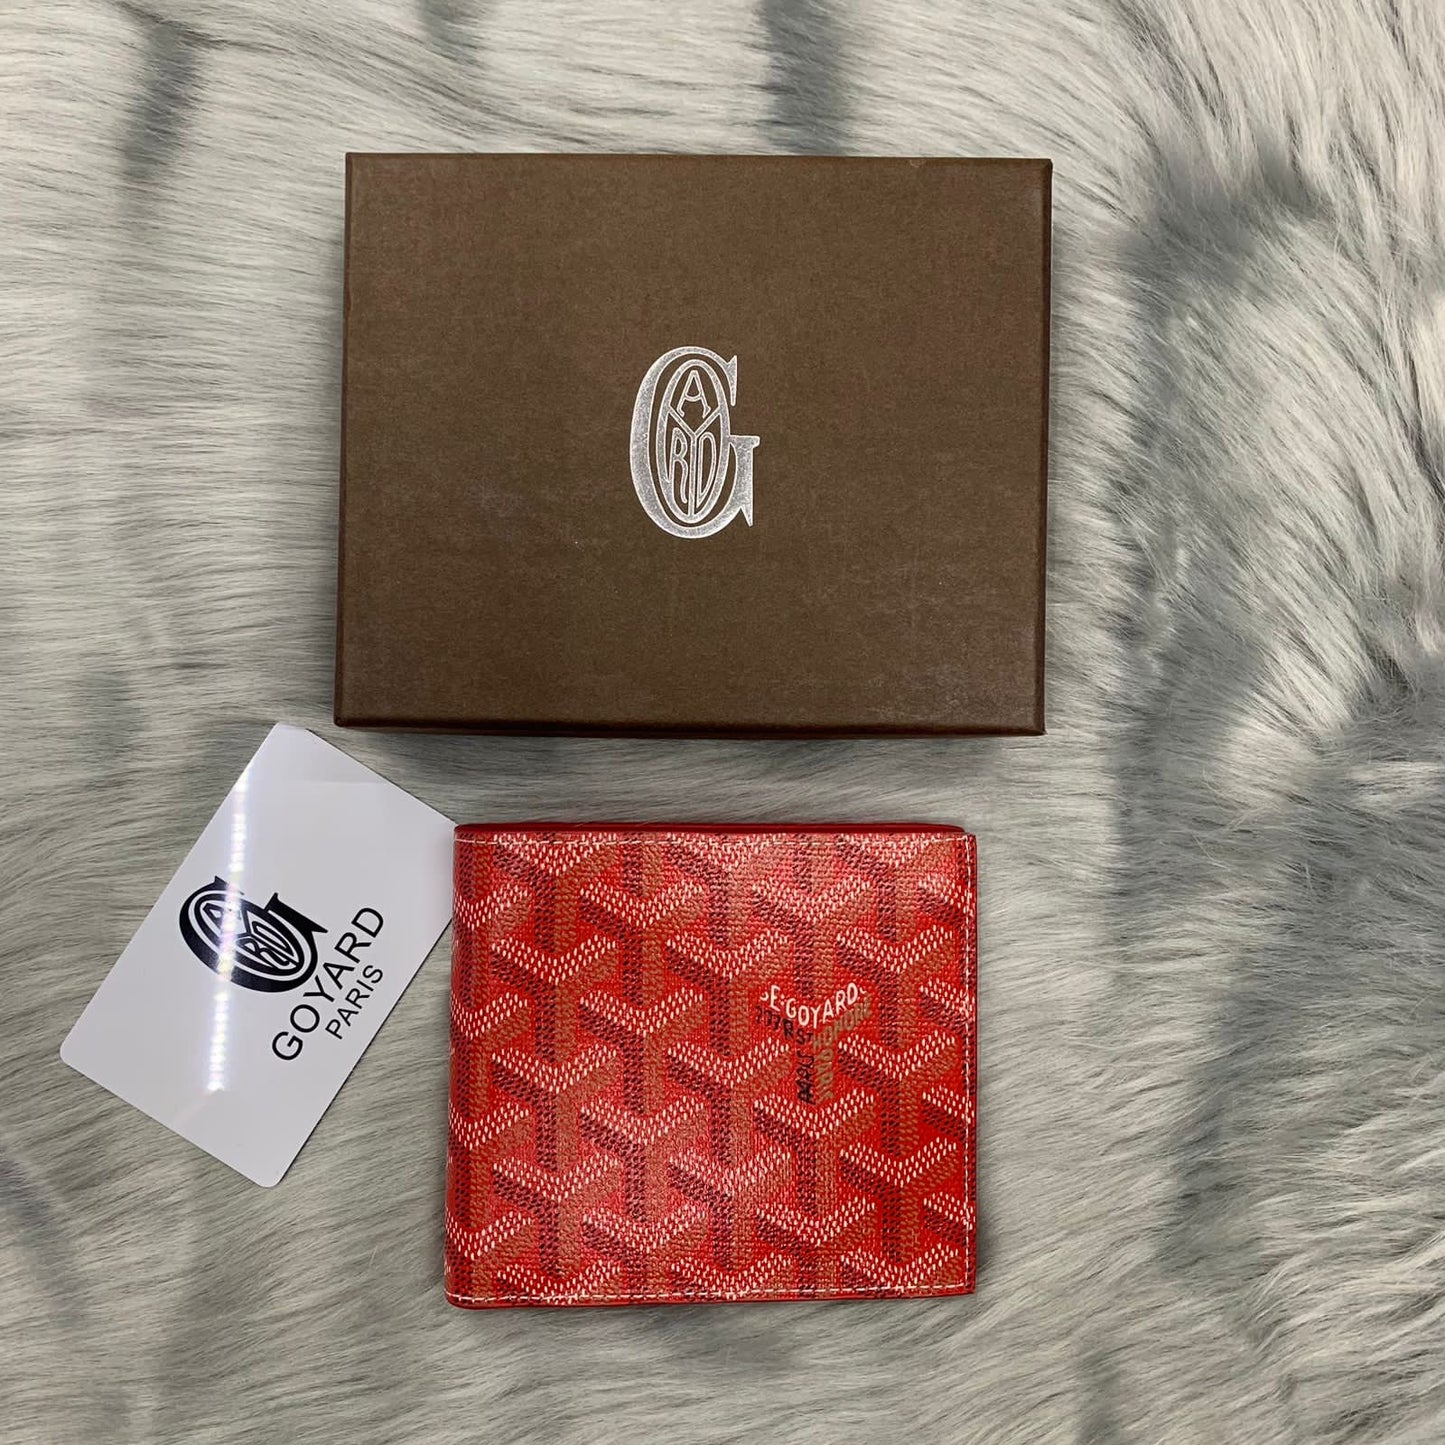 red goyard wallet